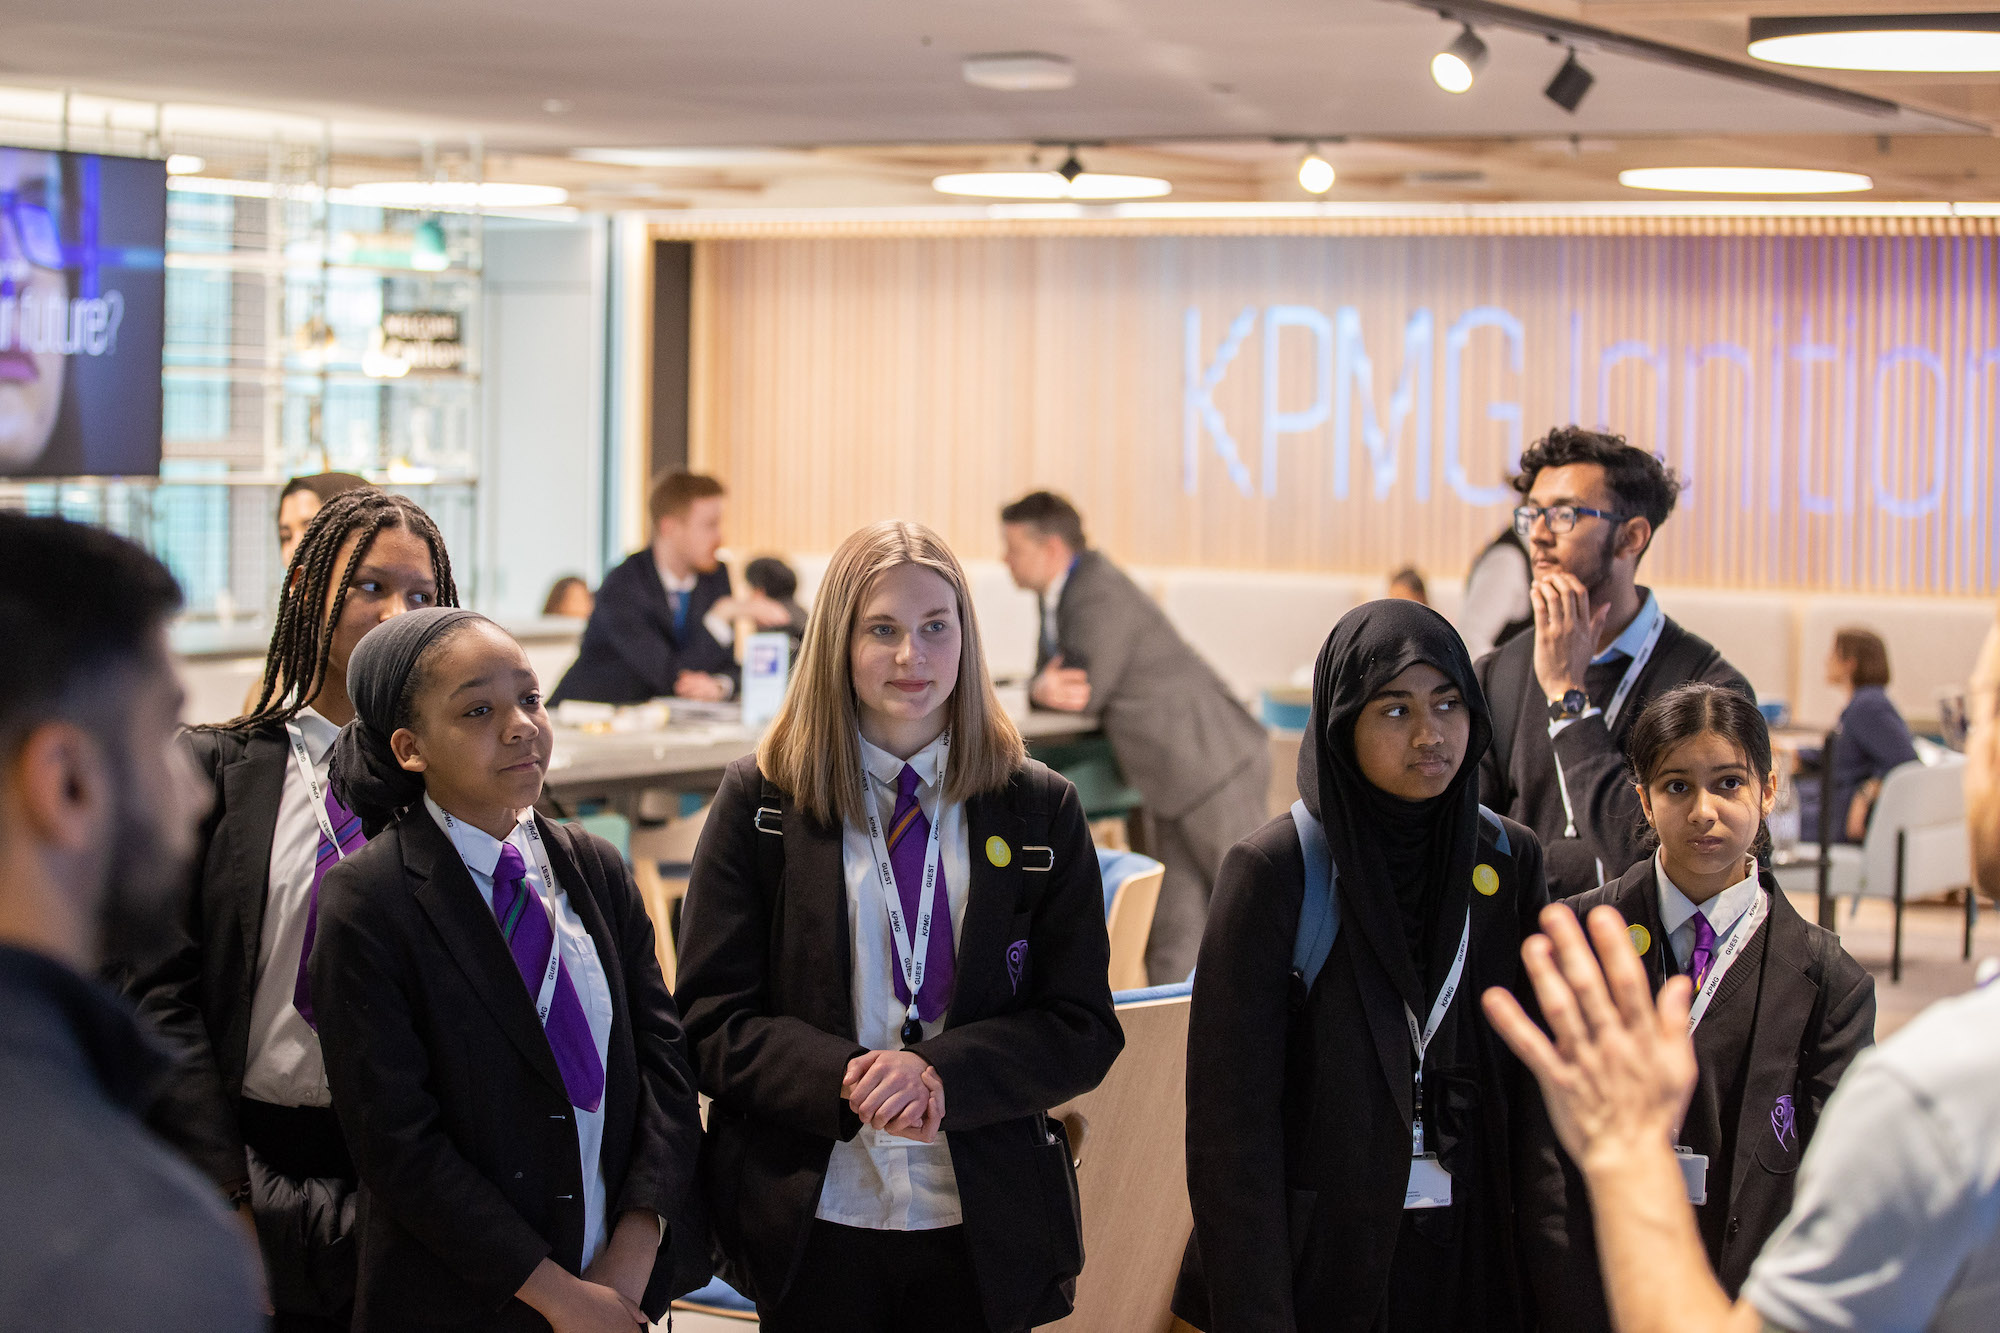 KPMG’s Scottish initiative breaks down social barriers in career progression